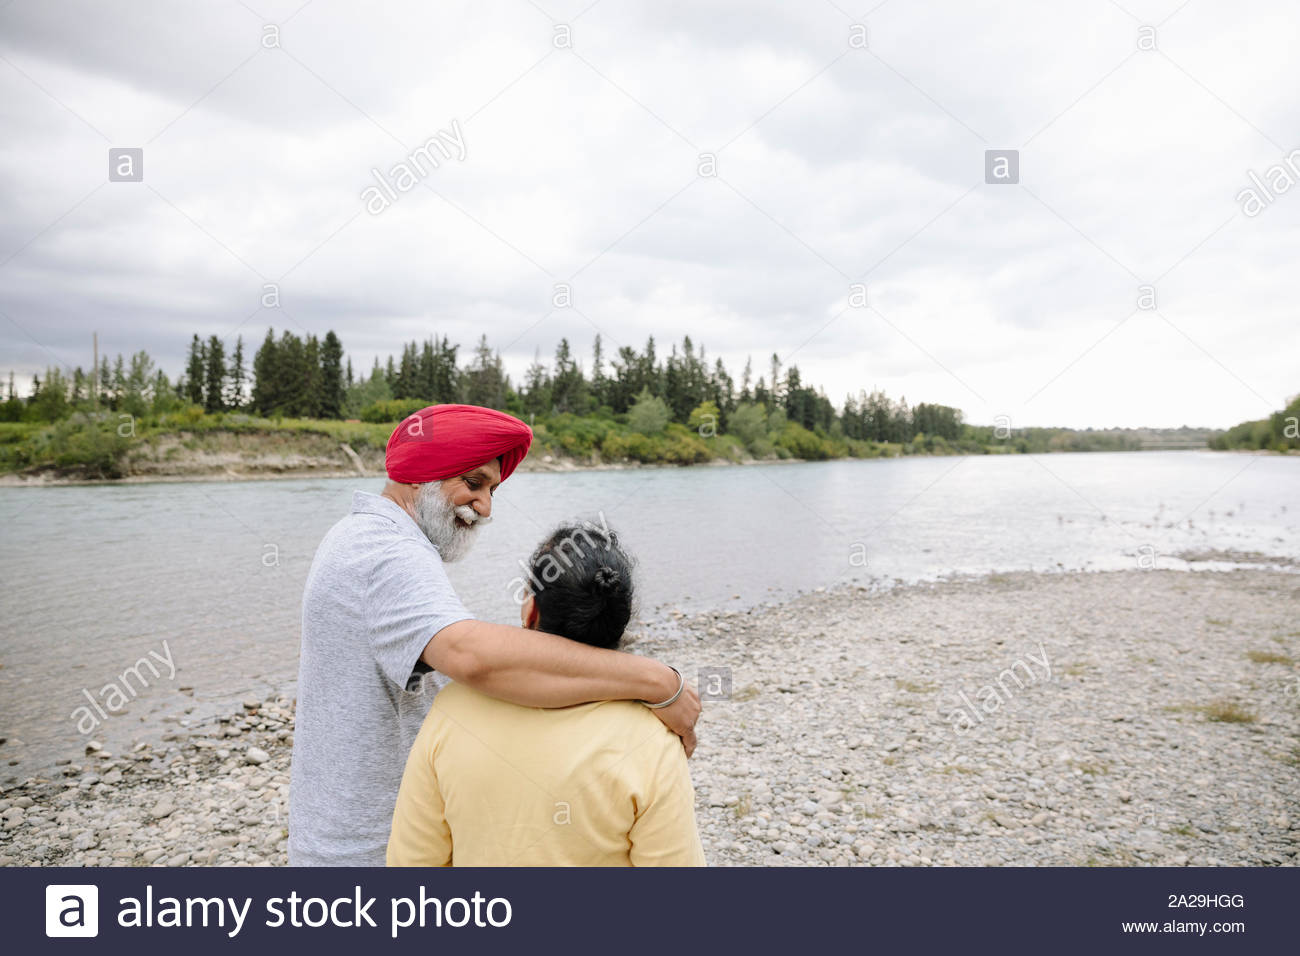 Mature man with arm around senior woman on lakeshore Stock Photo